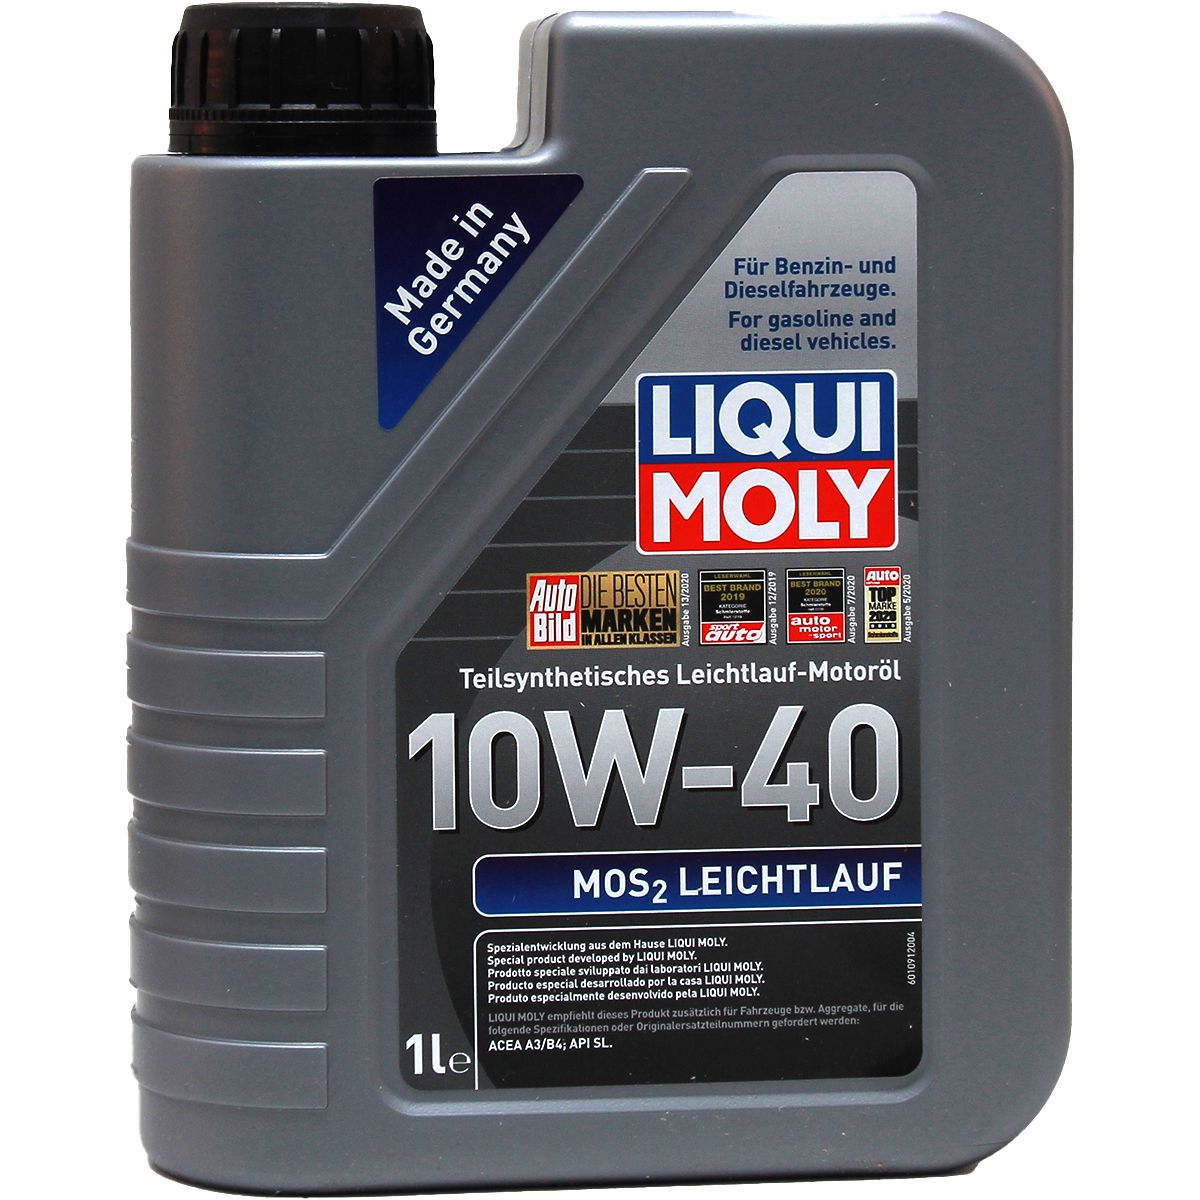 Liqui Moly Mos2 Leichtlauf 10W-40 1 Liter